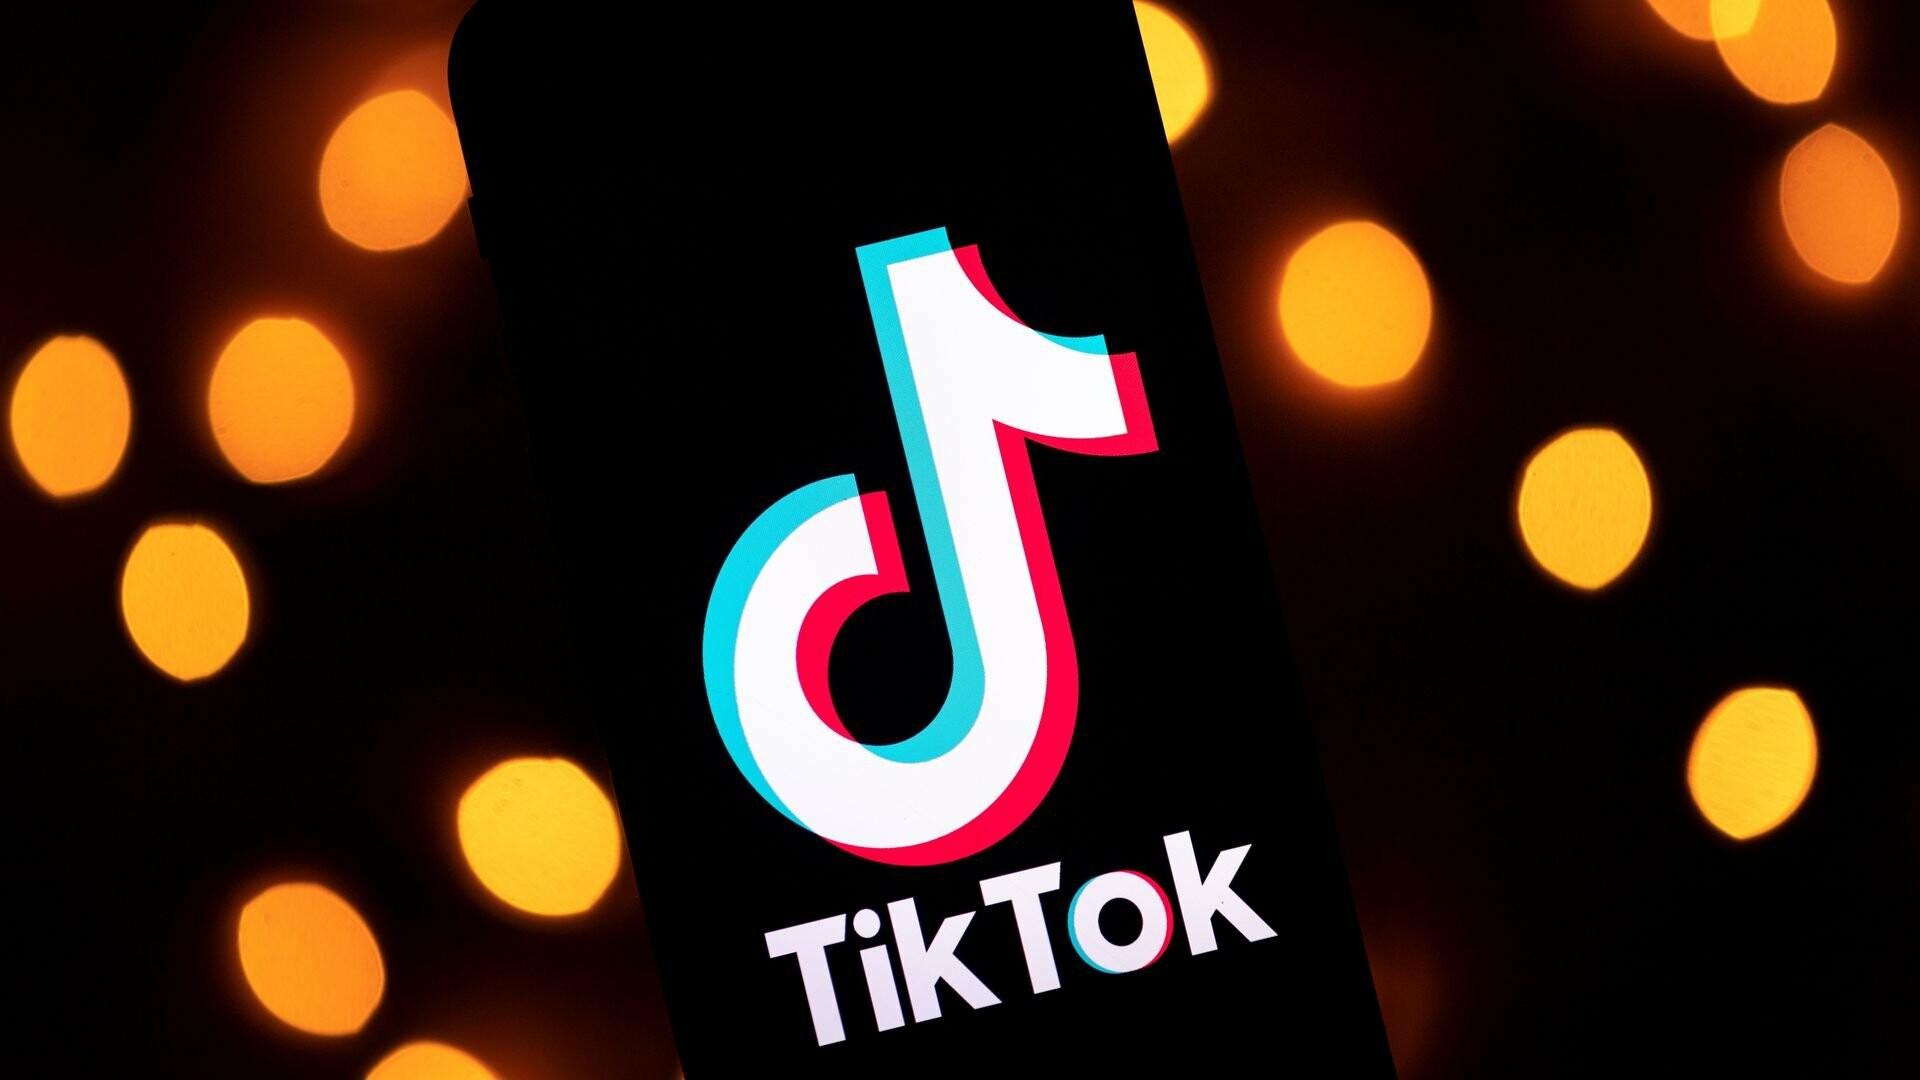 TikTok: A social platform for mobile devices, Logo. 1920x1080 Full HD Wallpaper.